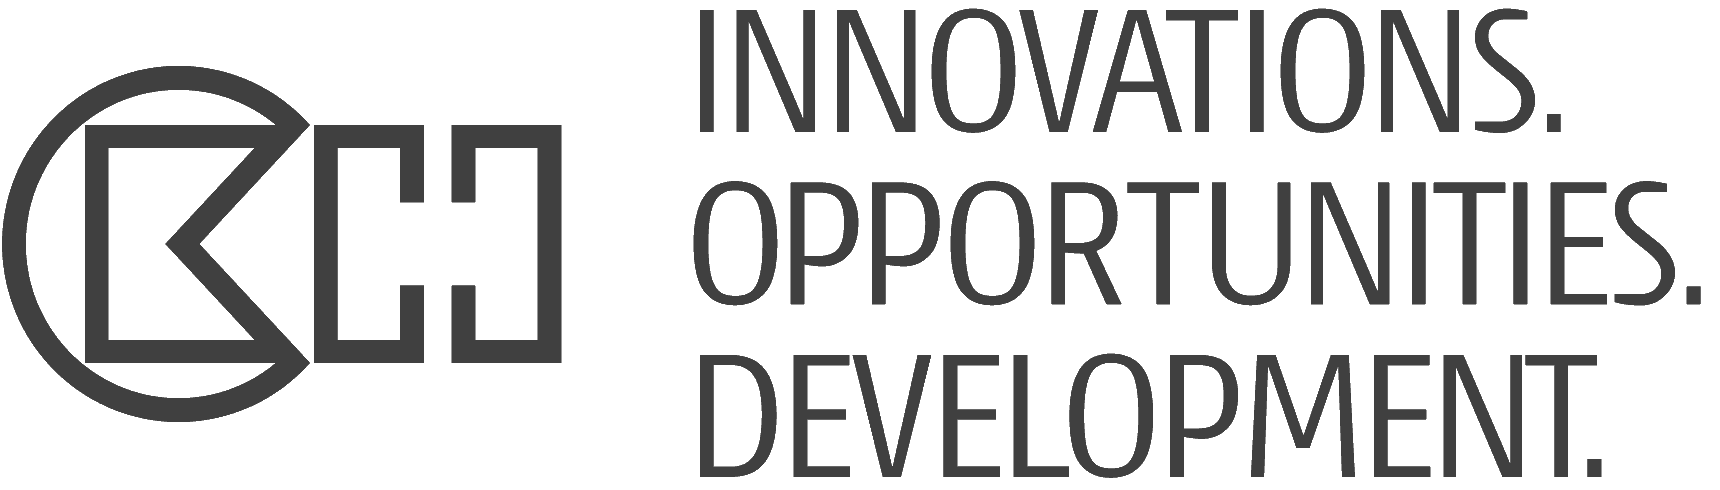 CKH Innovations Opportunities Development